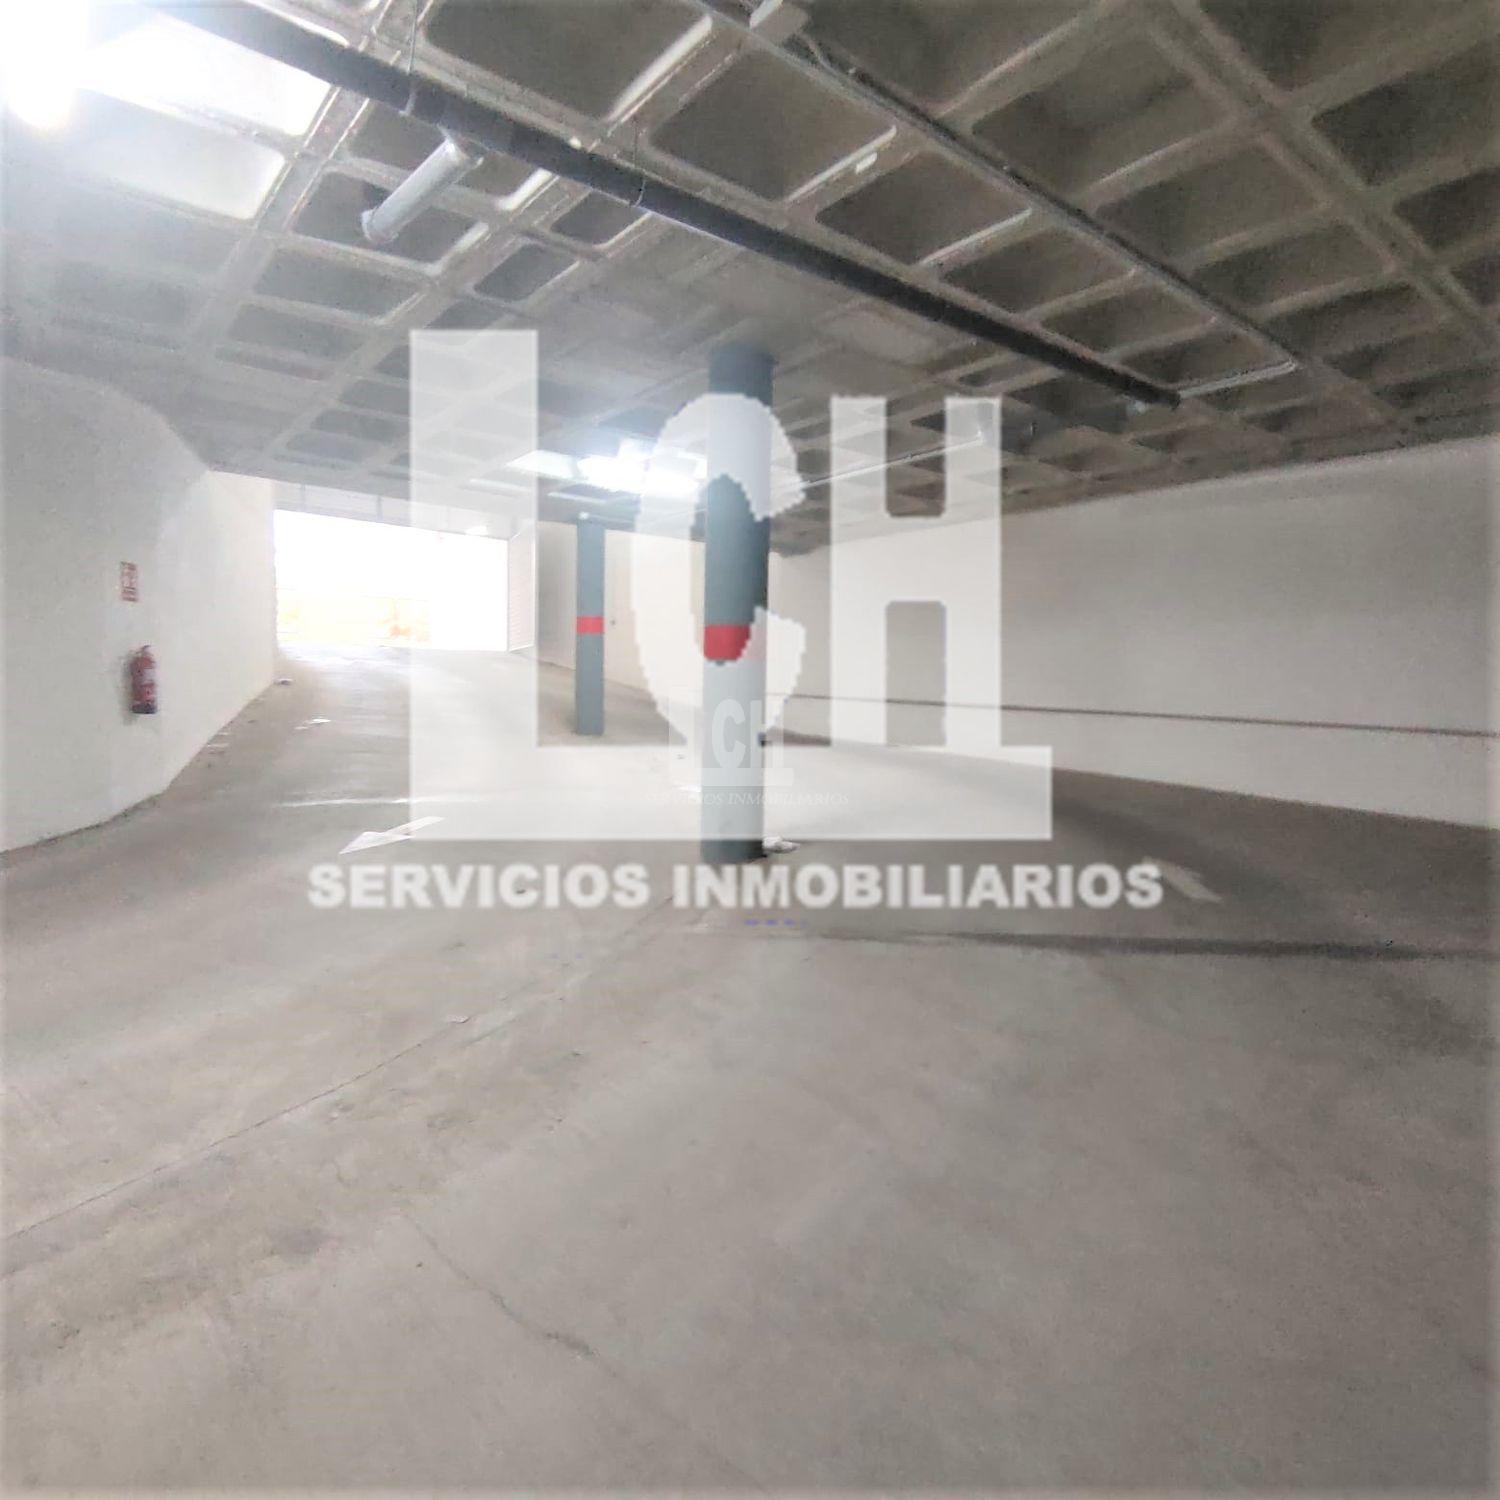 For sale of garage in València